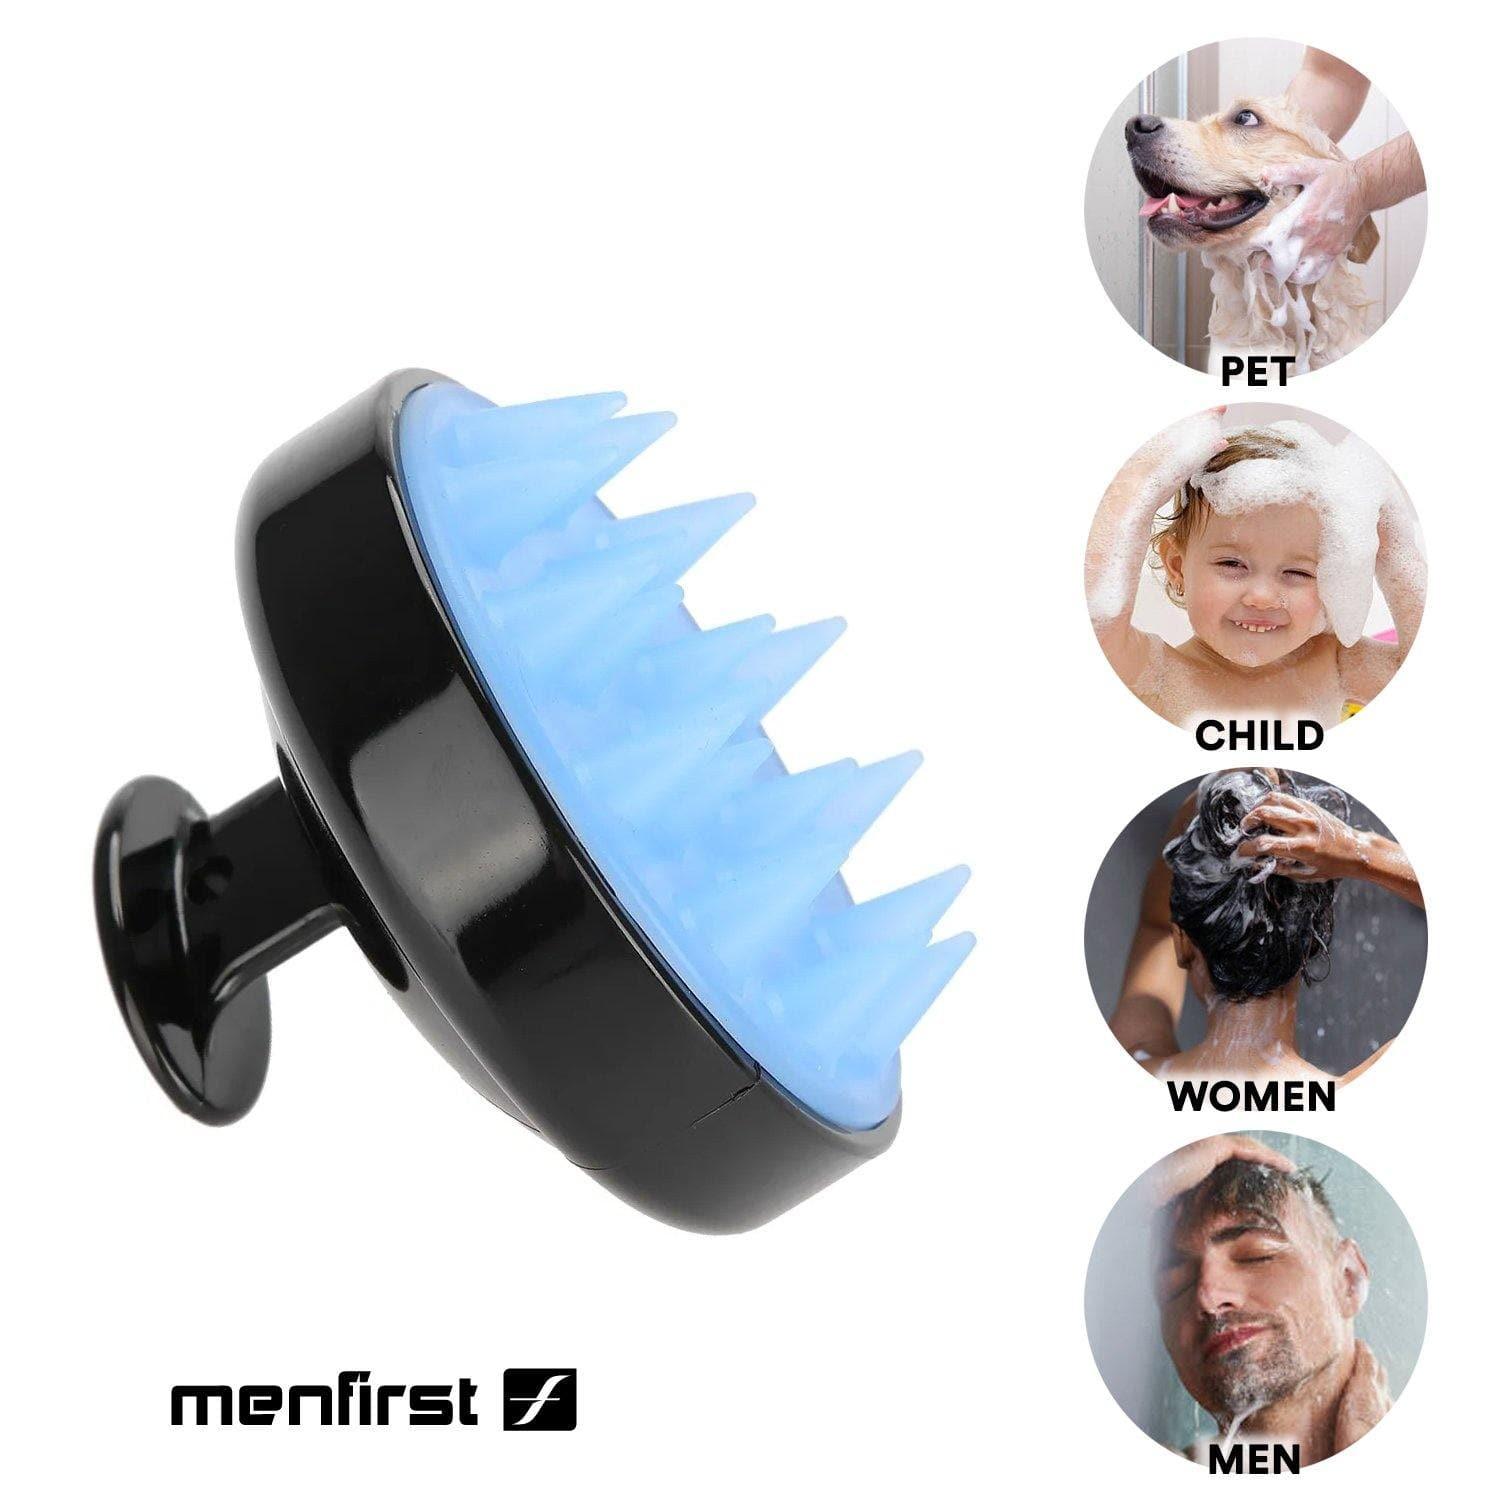 Menfirst Shampoo Brush Soft & Flexible Silicone Bristle - Menfirst - Dye hair